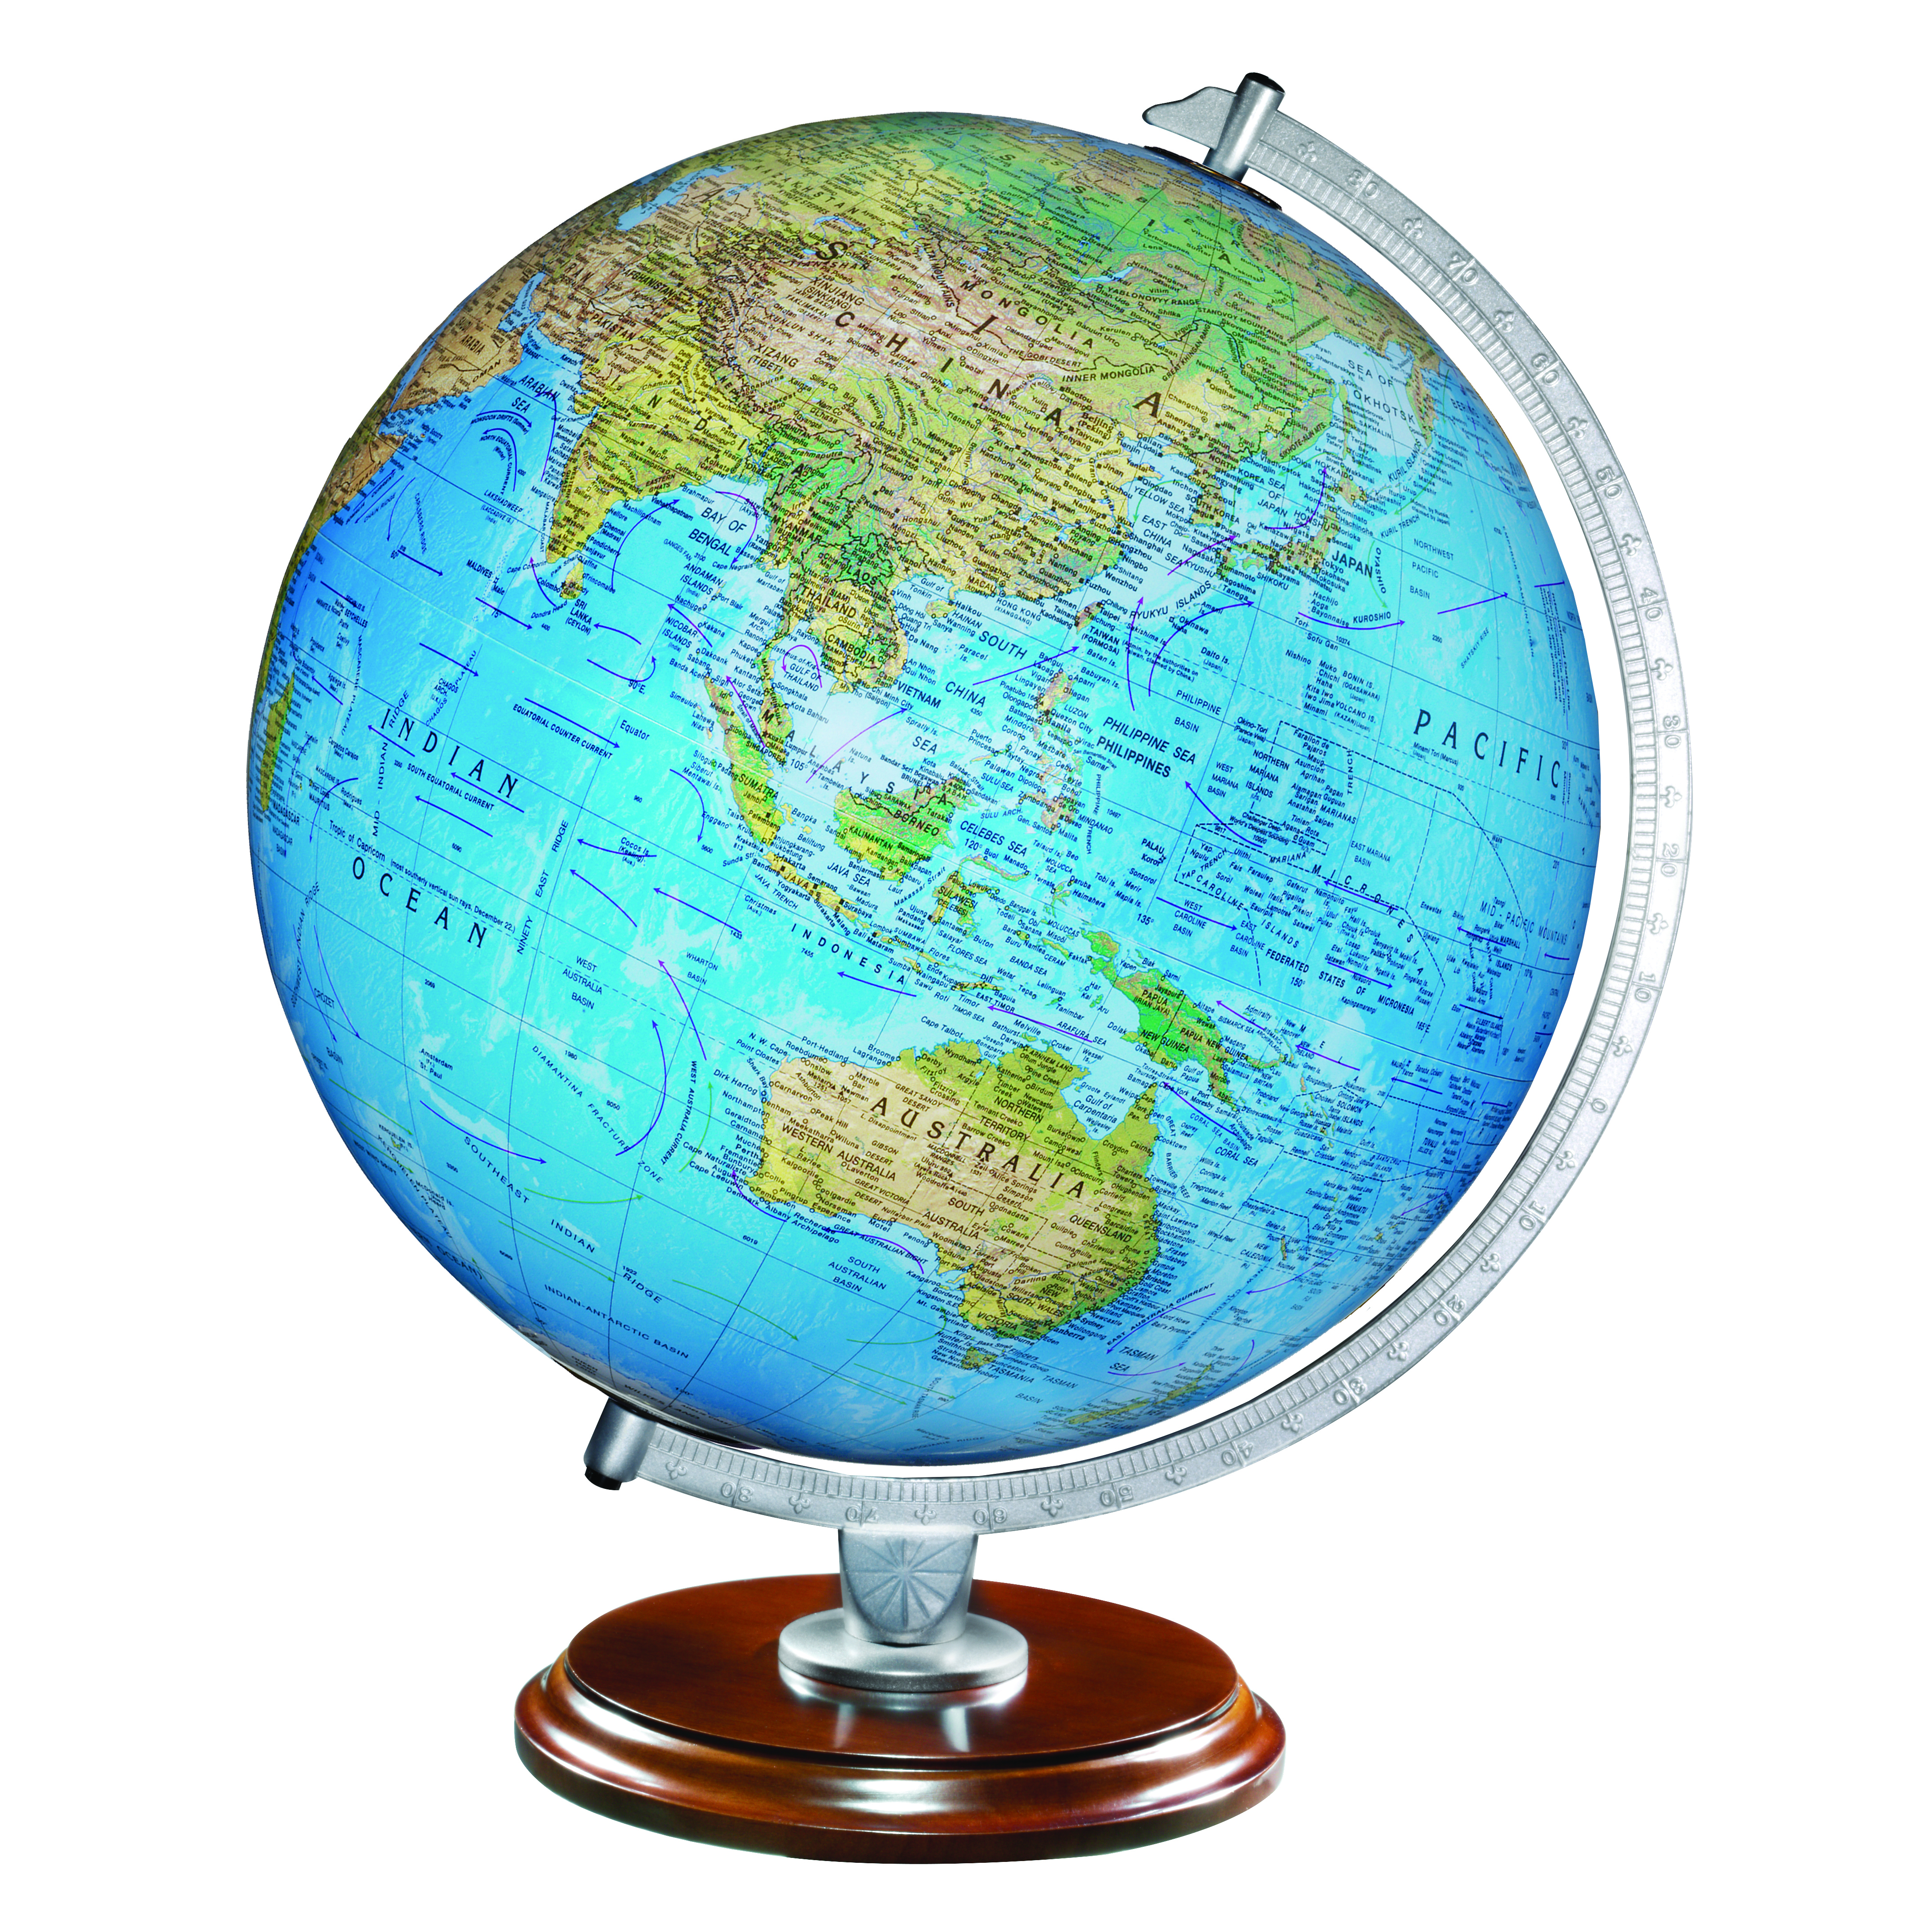 4 Ft. World Map - Laminated - Replogle Globes